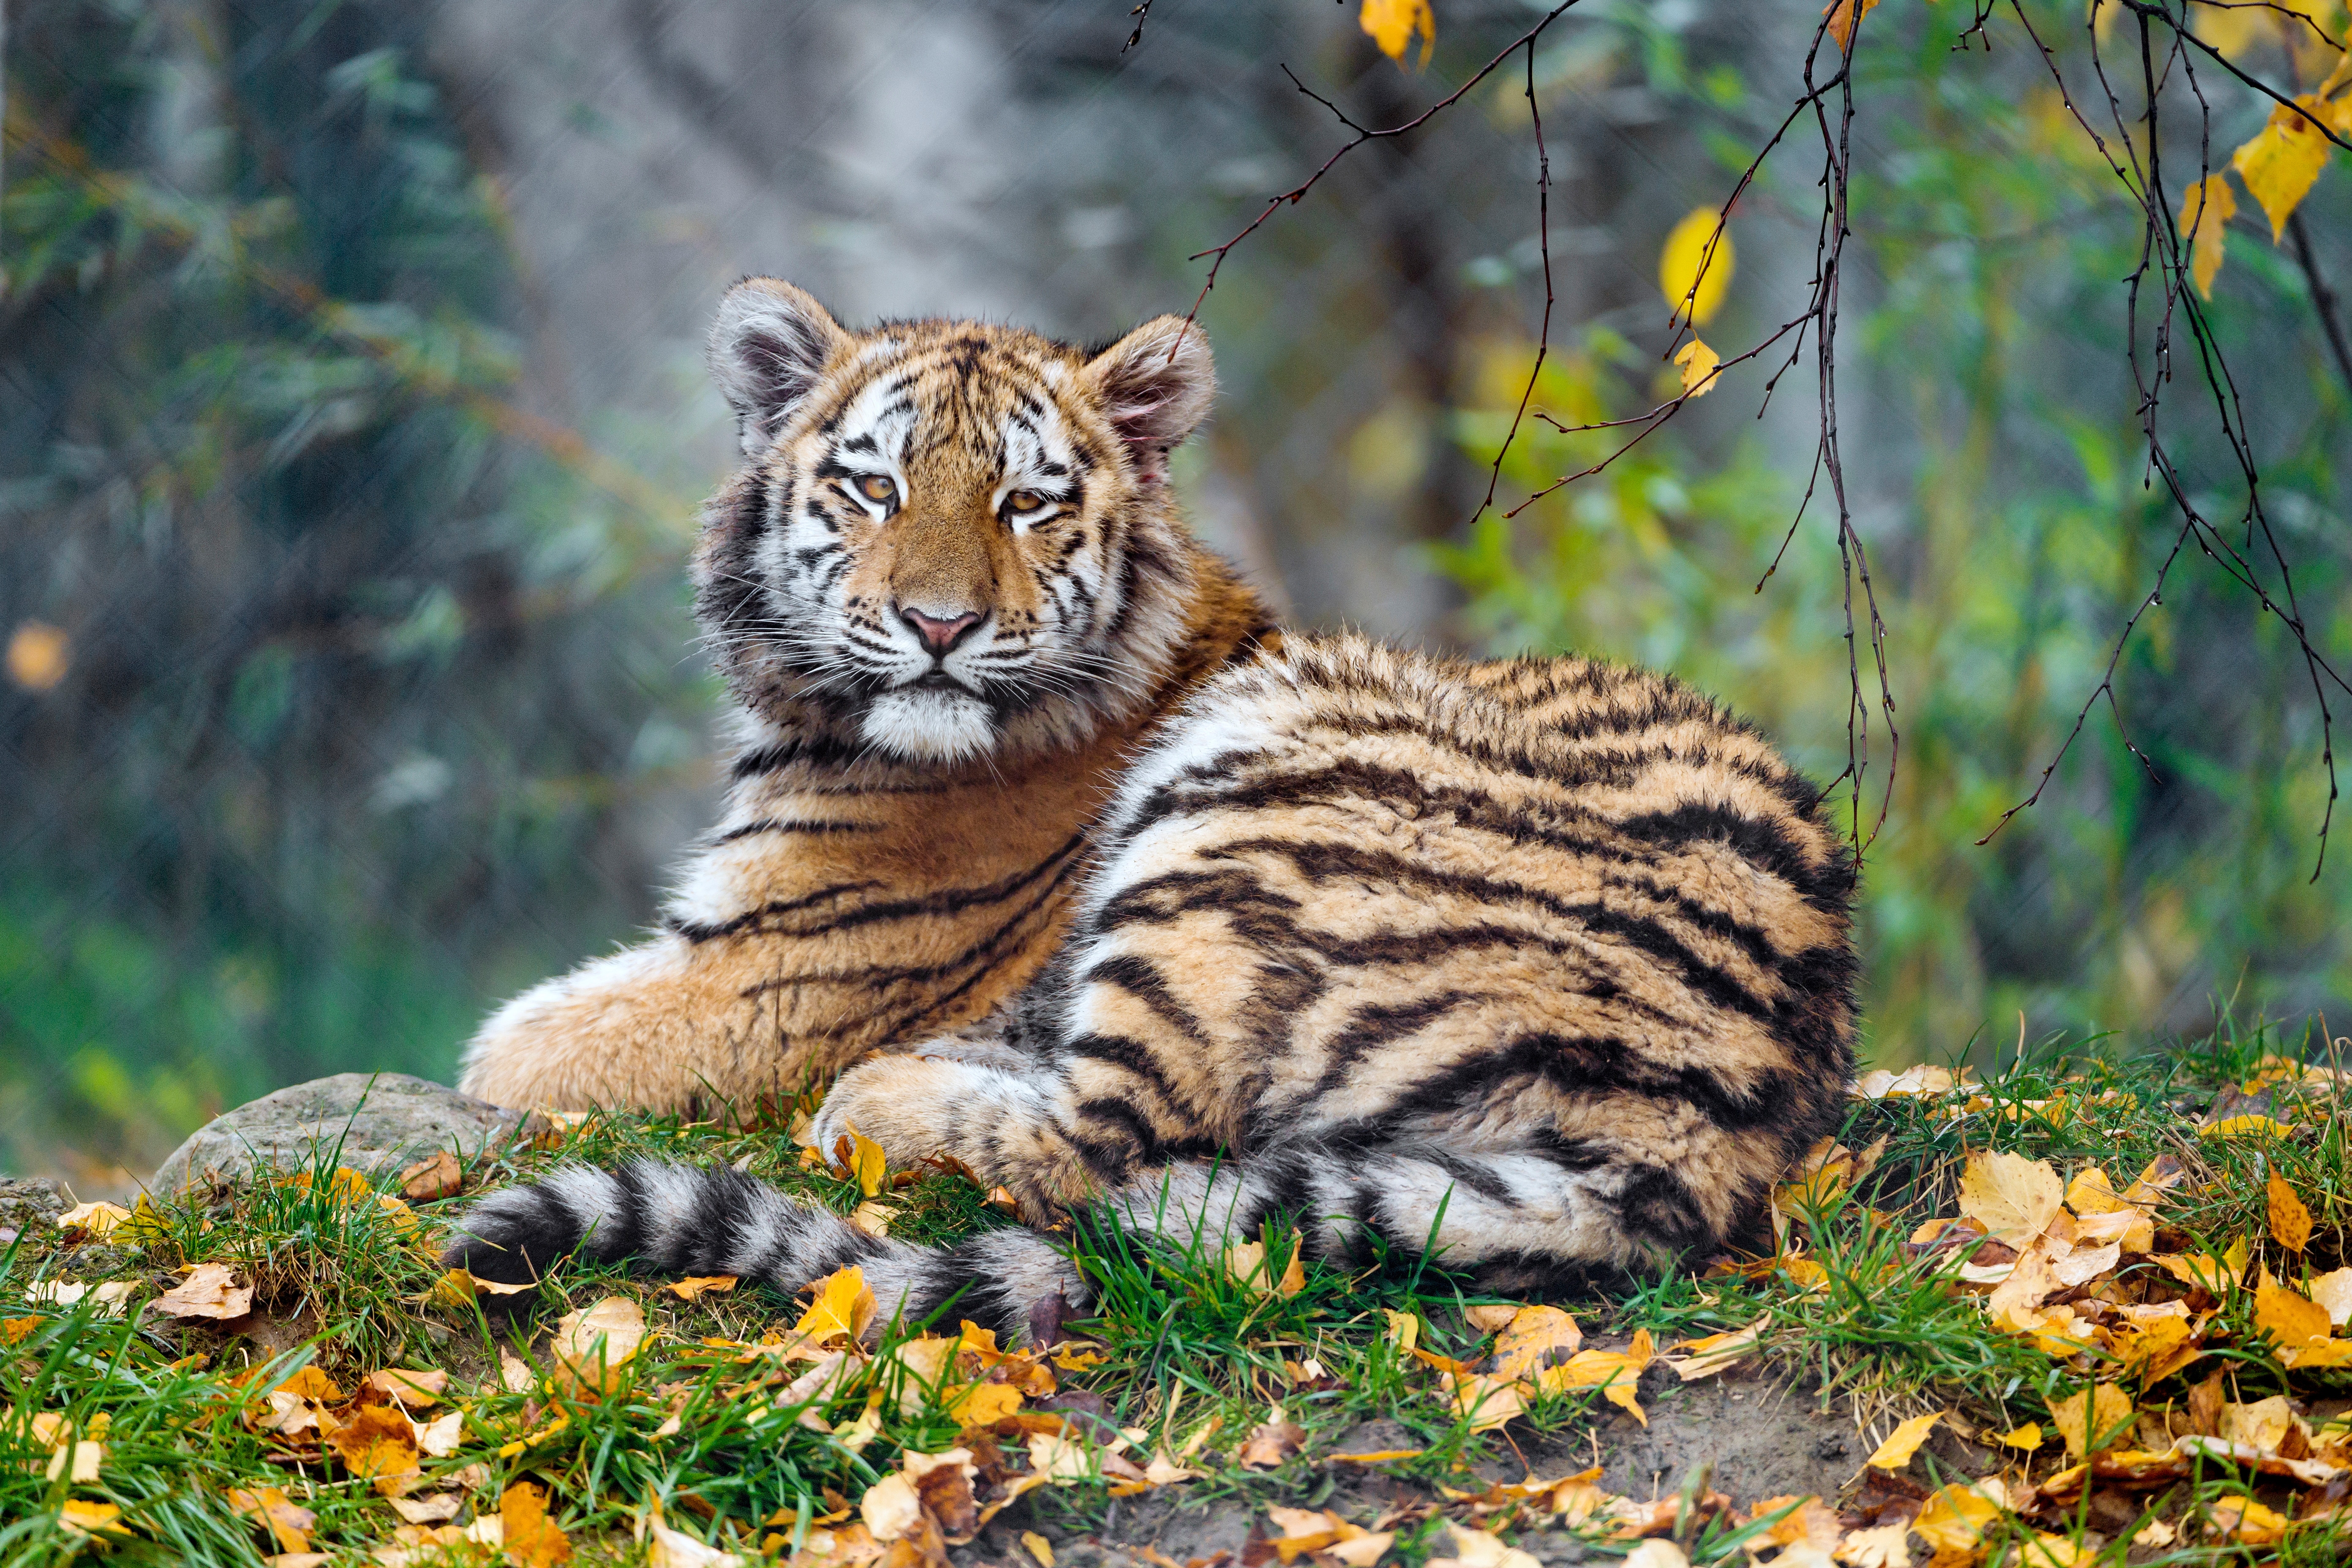 HD wallpaper, Zoo, Carnivore, Young Tigress, Autumn Leaves, Portrait, Big Cat, Siberian Tiger, 5K, Wild Animal, Grass, Predator